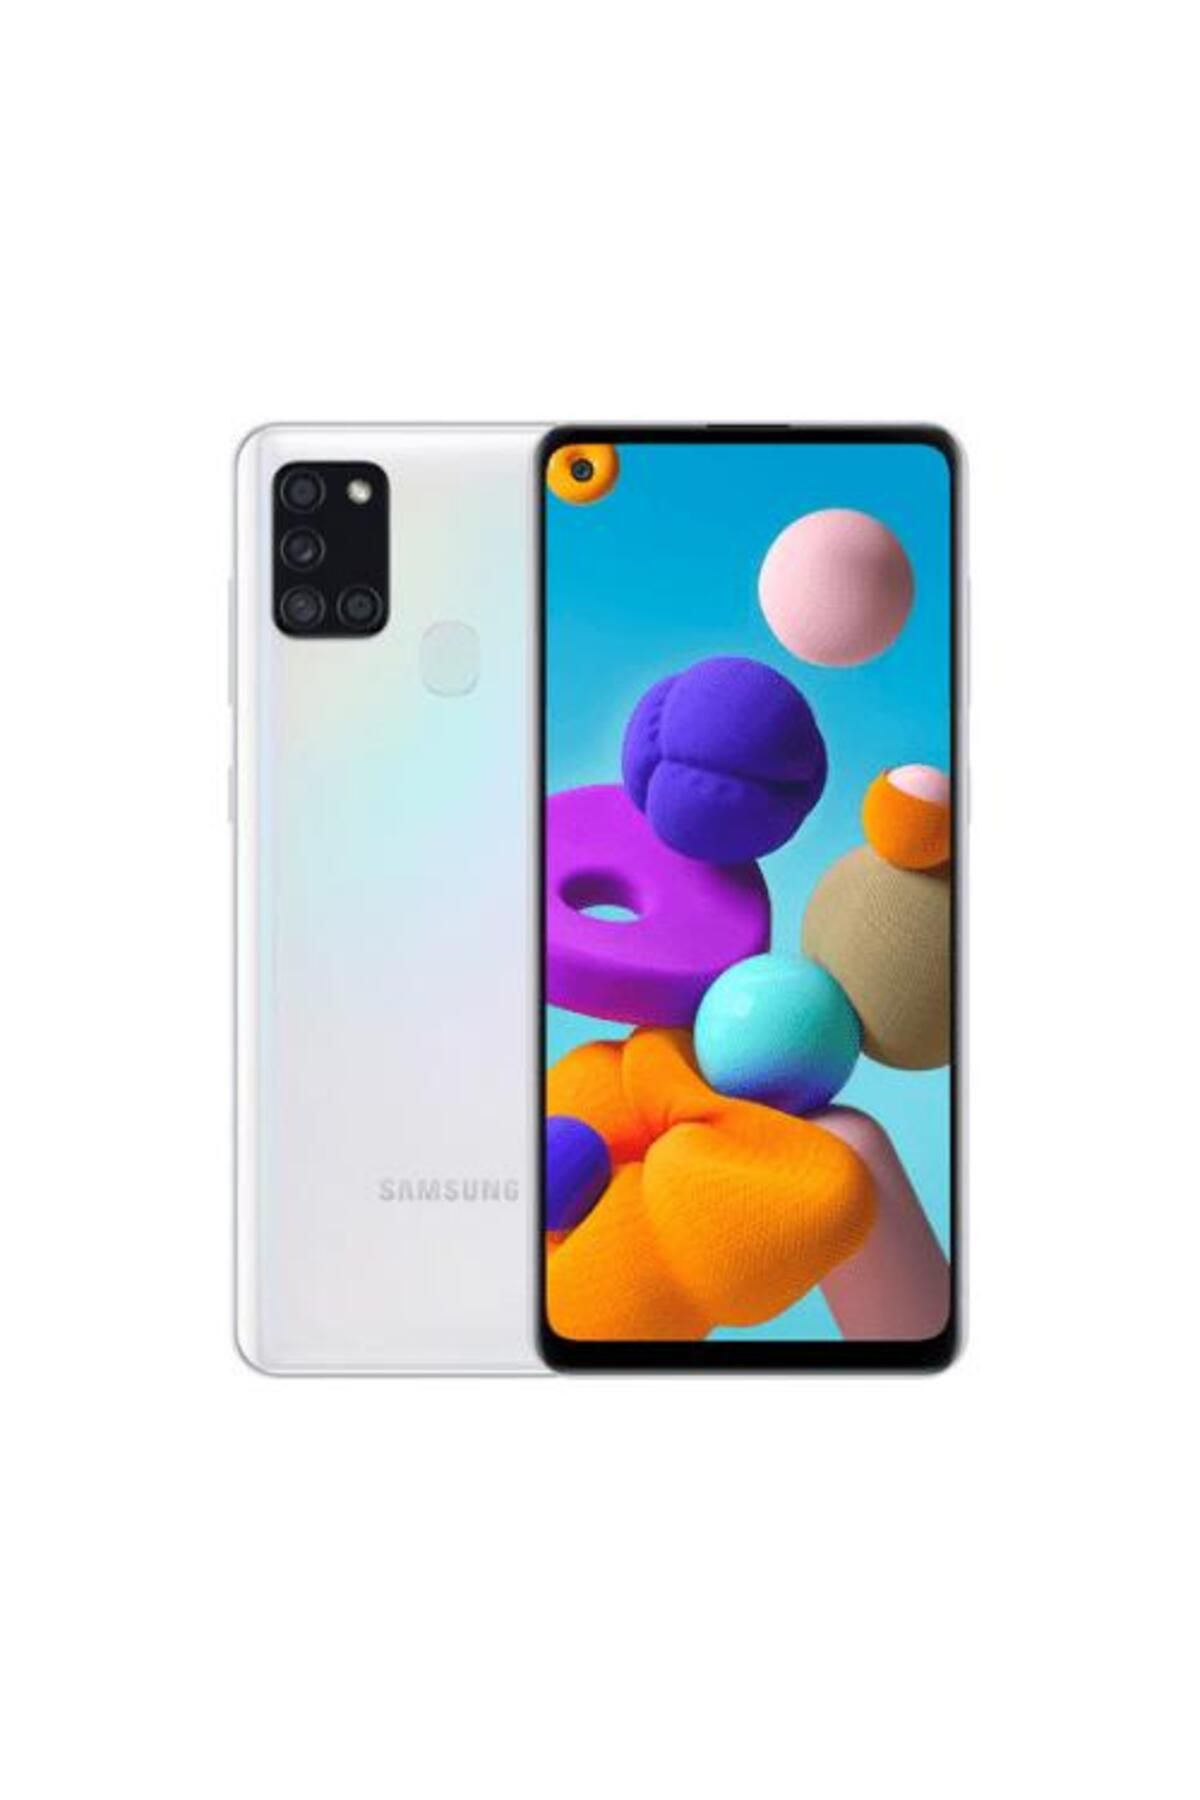 Samsung Yenilenmiş Galaxy A21s 64gb -a Kalite- Beyaz